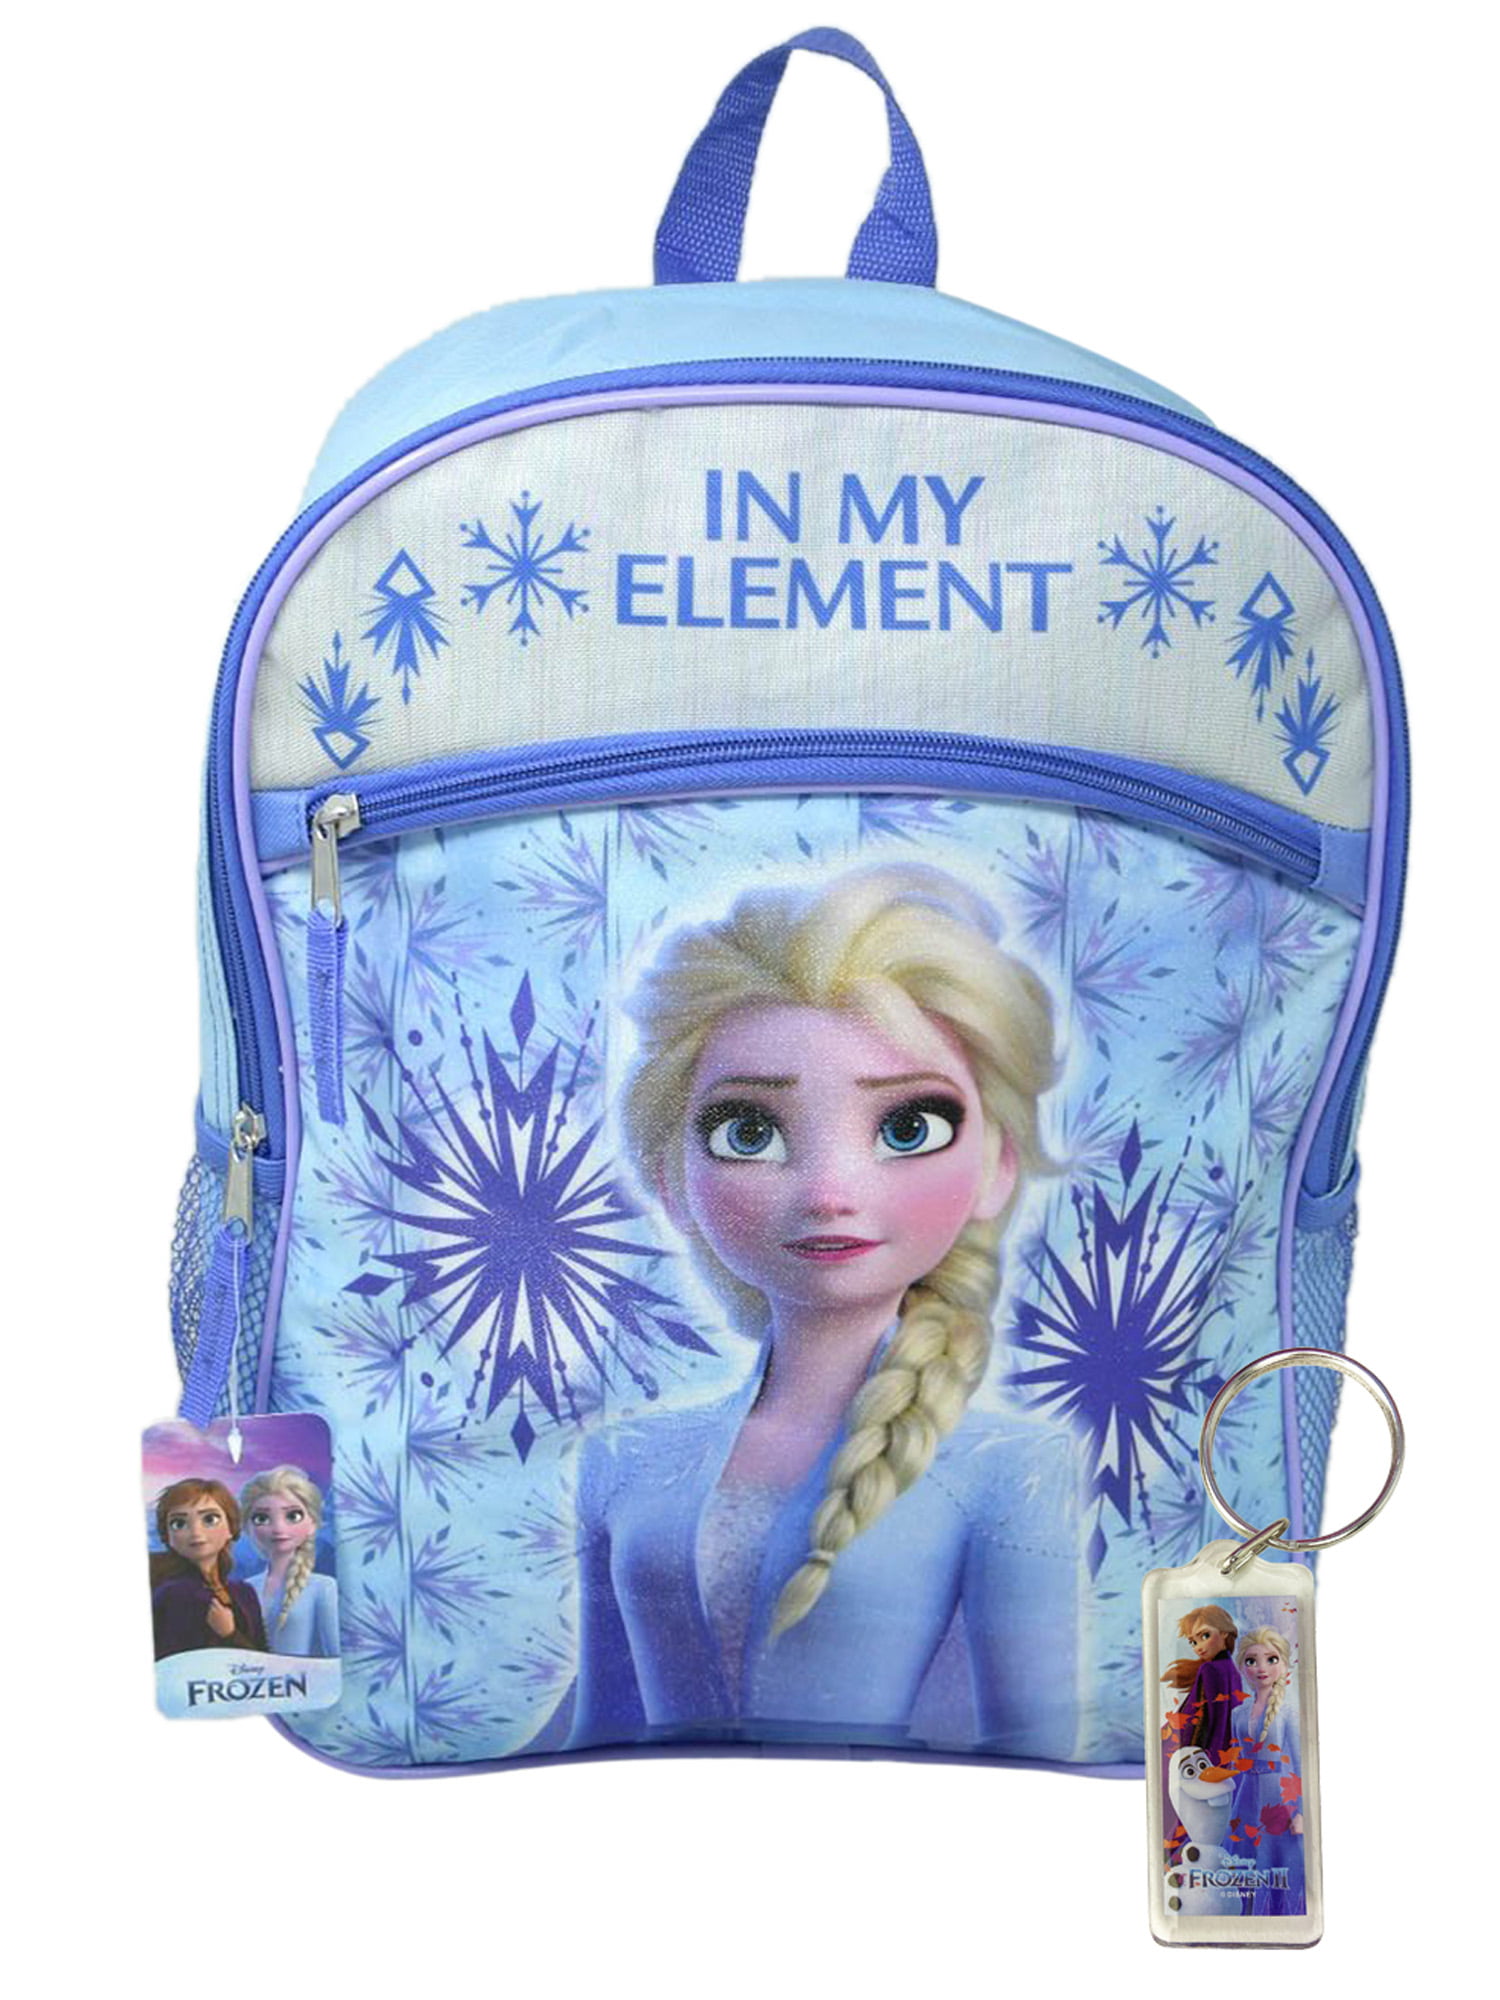 Frozen 16 Backpack Disney In My Element Anna Elsa Olaf Key Chain Set 969df147 282e 4589 b620 778add7bc850.b32be884c4ae8f4d3fbb386871b6ea20